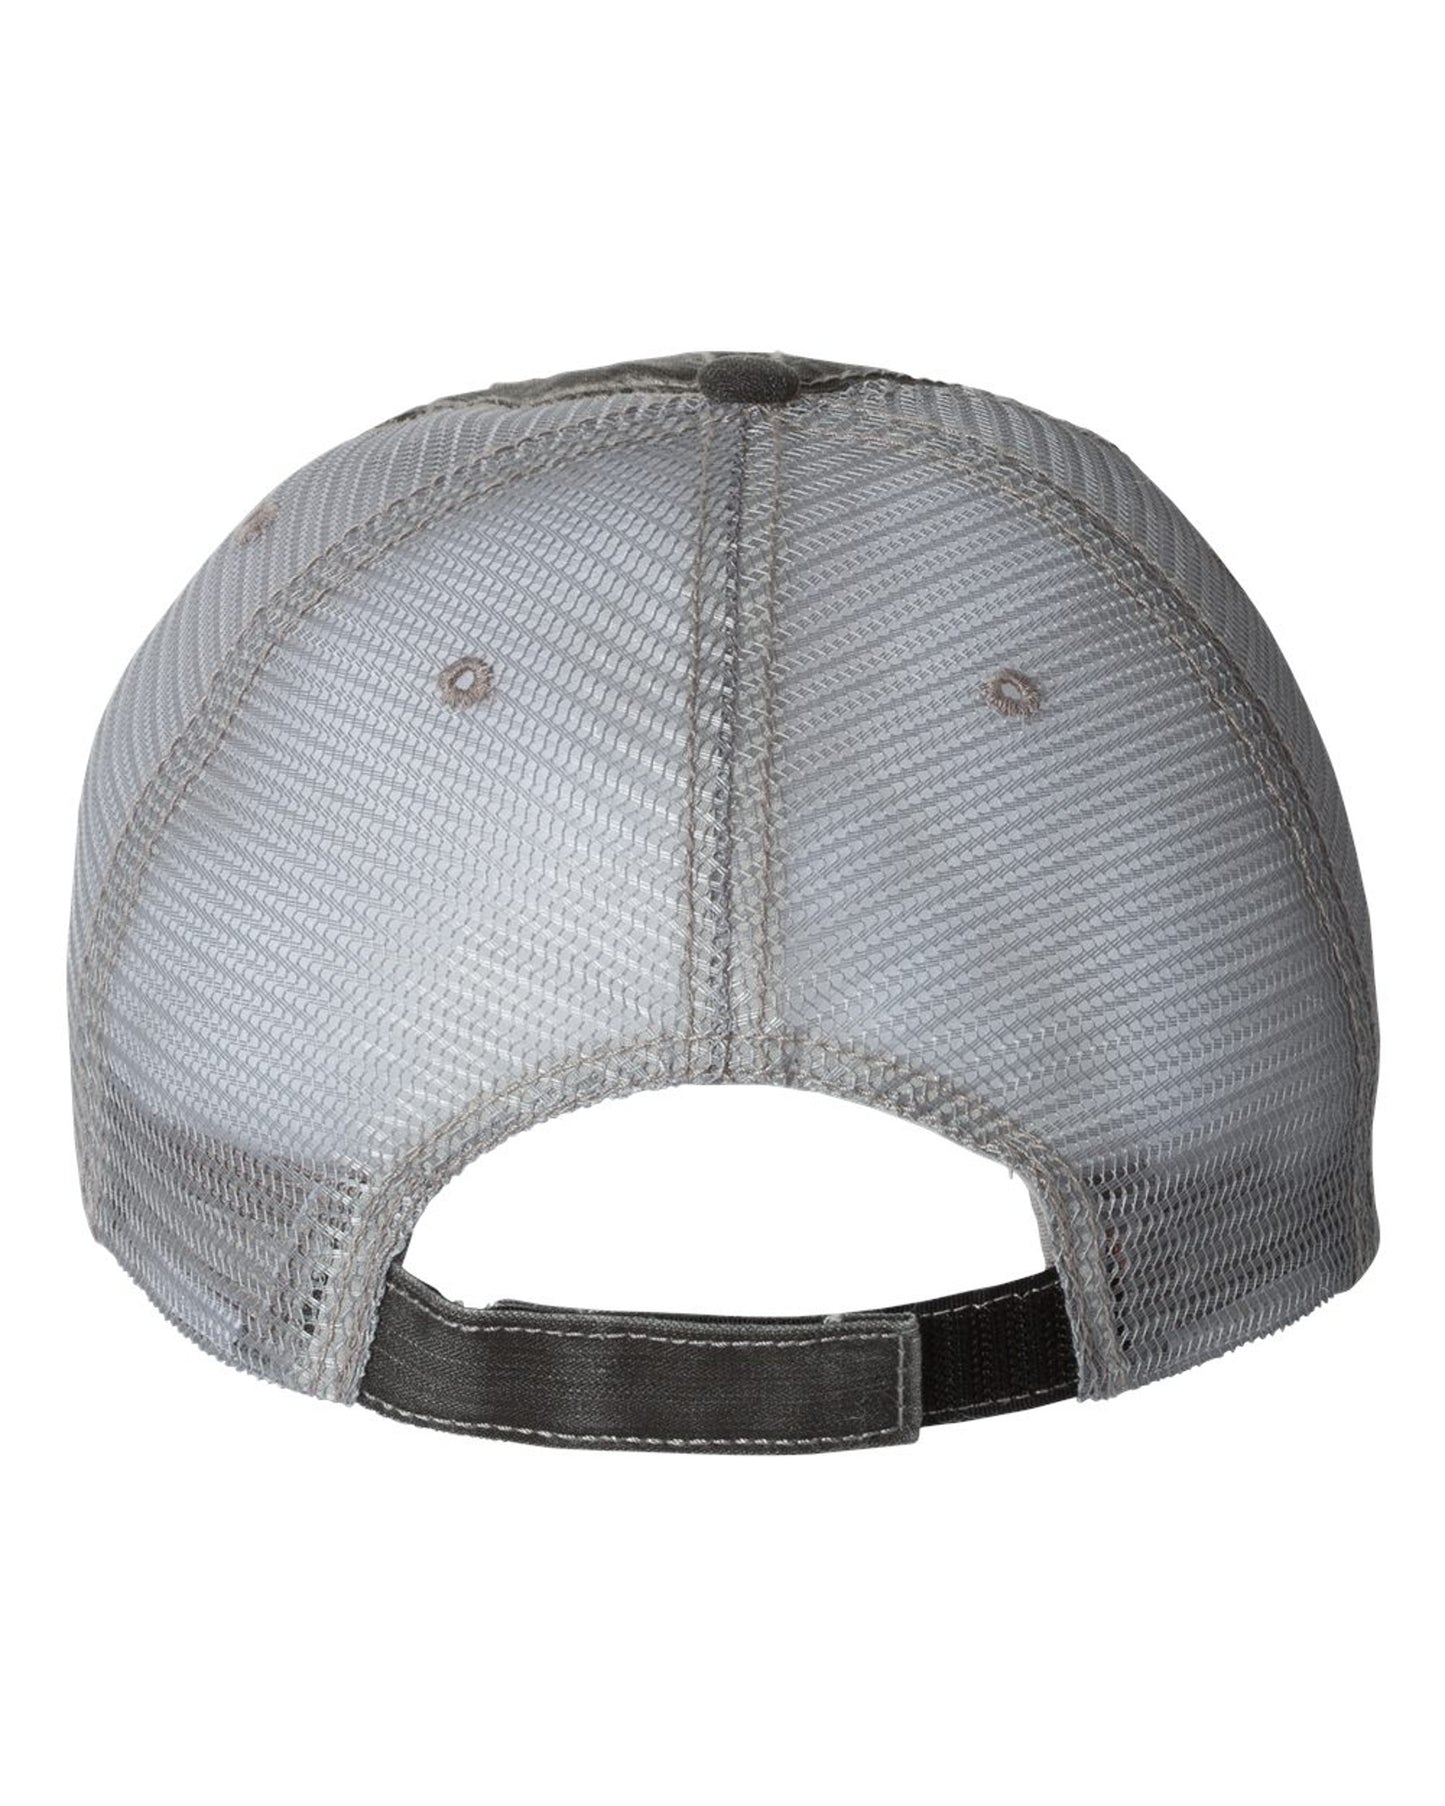 Gray Distressed Trucker Hat | Preble Hornets Bling Hat